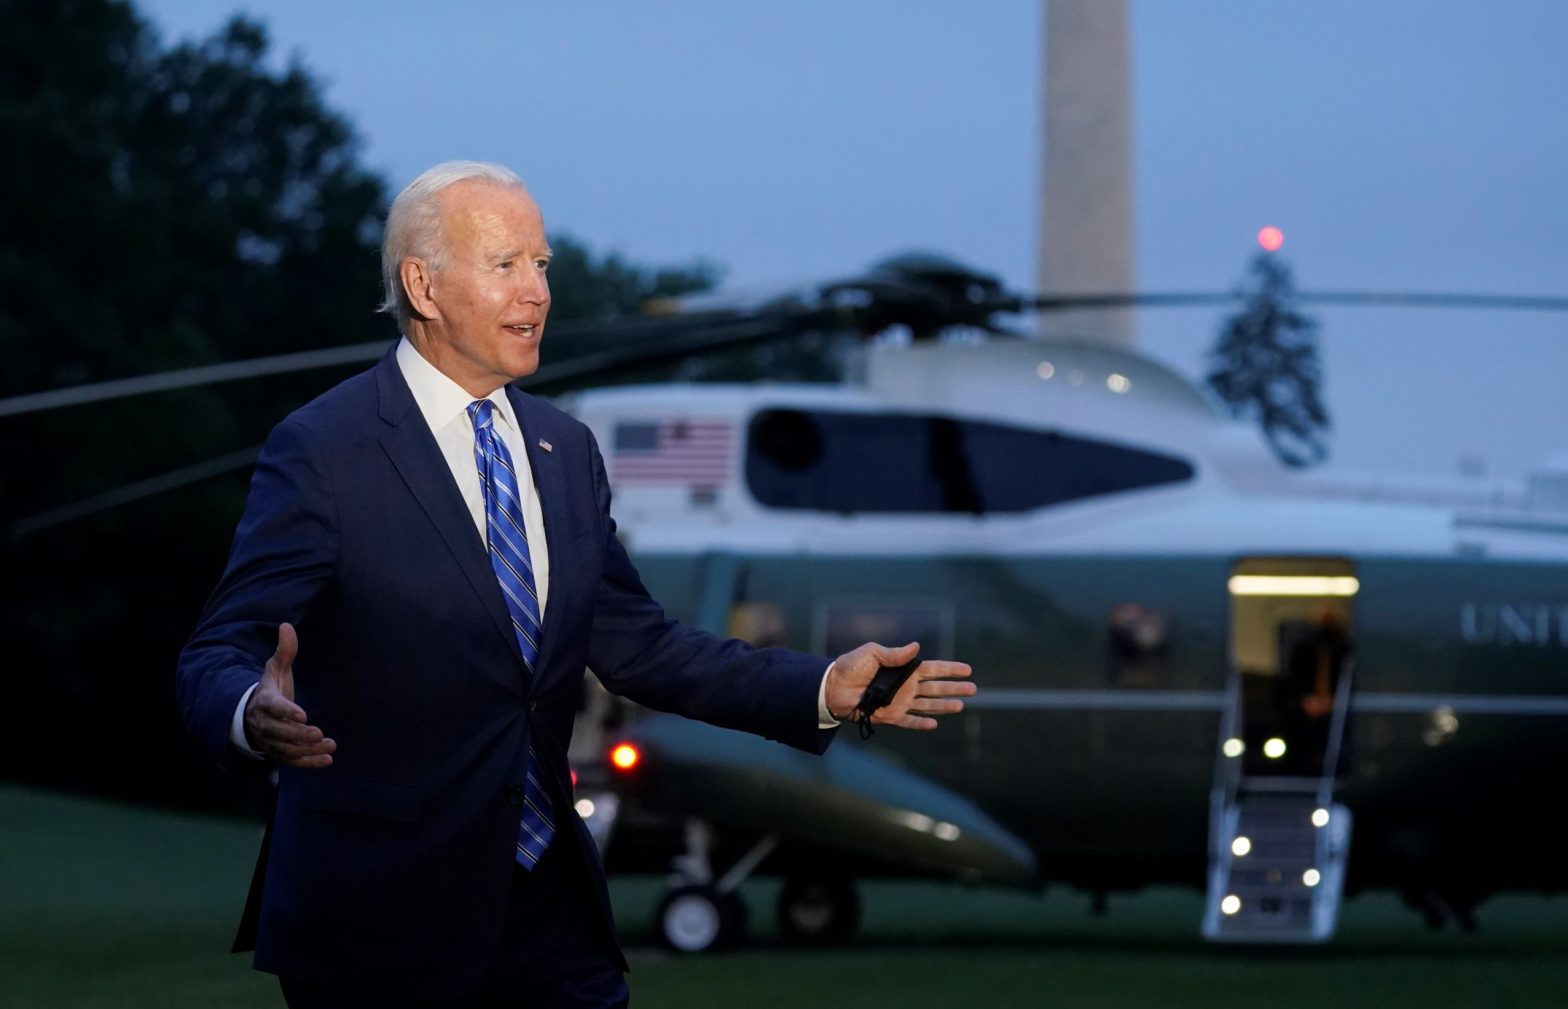 Biden: Senate Filibuster Change on Debt a ‘Real Possibility’